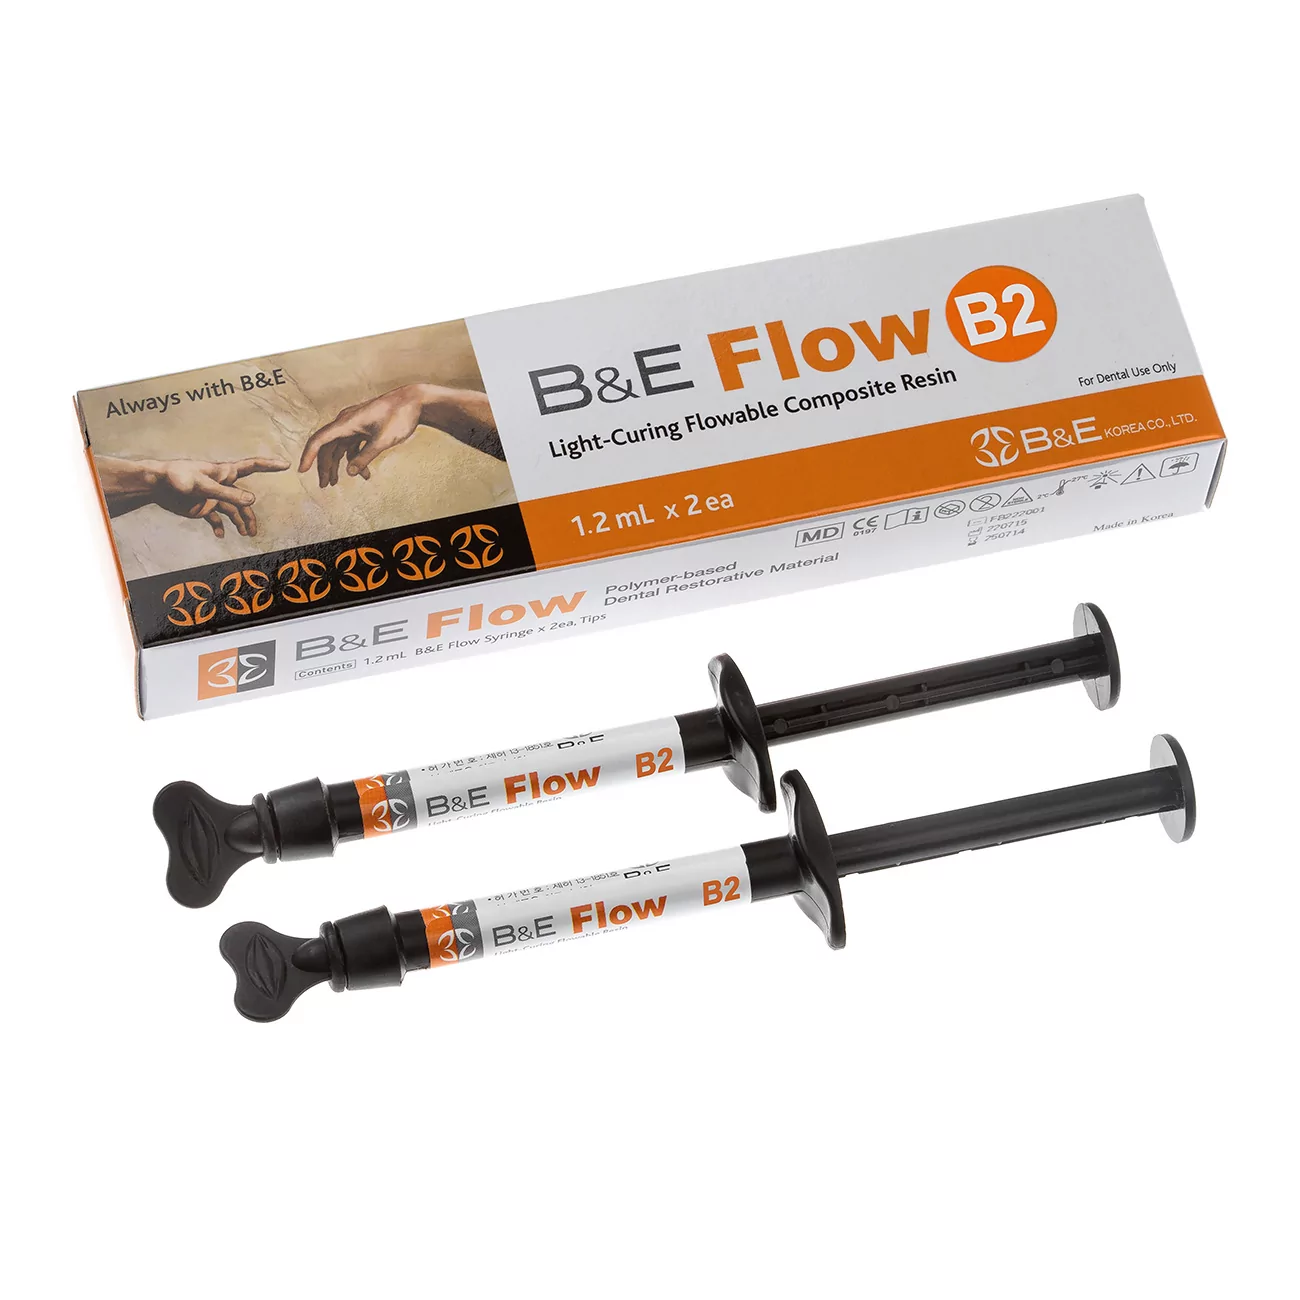 B&E Flow цвет B2 шприц 2гр.х2шт. Текучий светоотверждаемый композит, B&E Korea